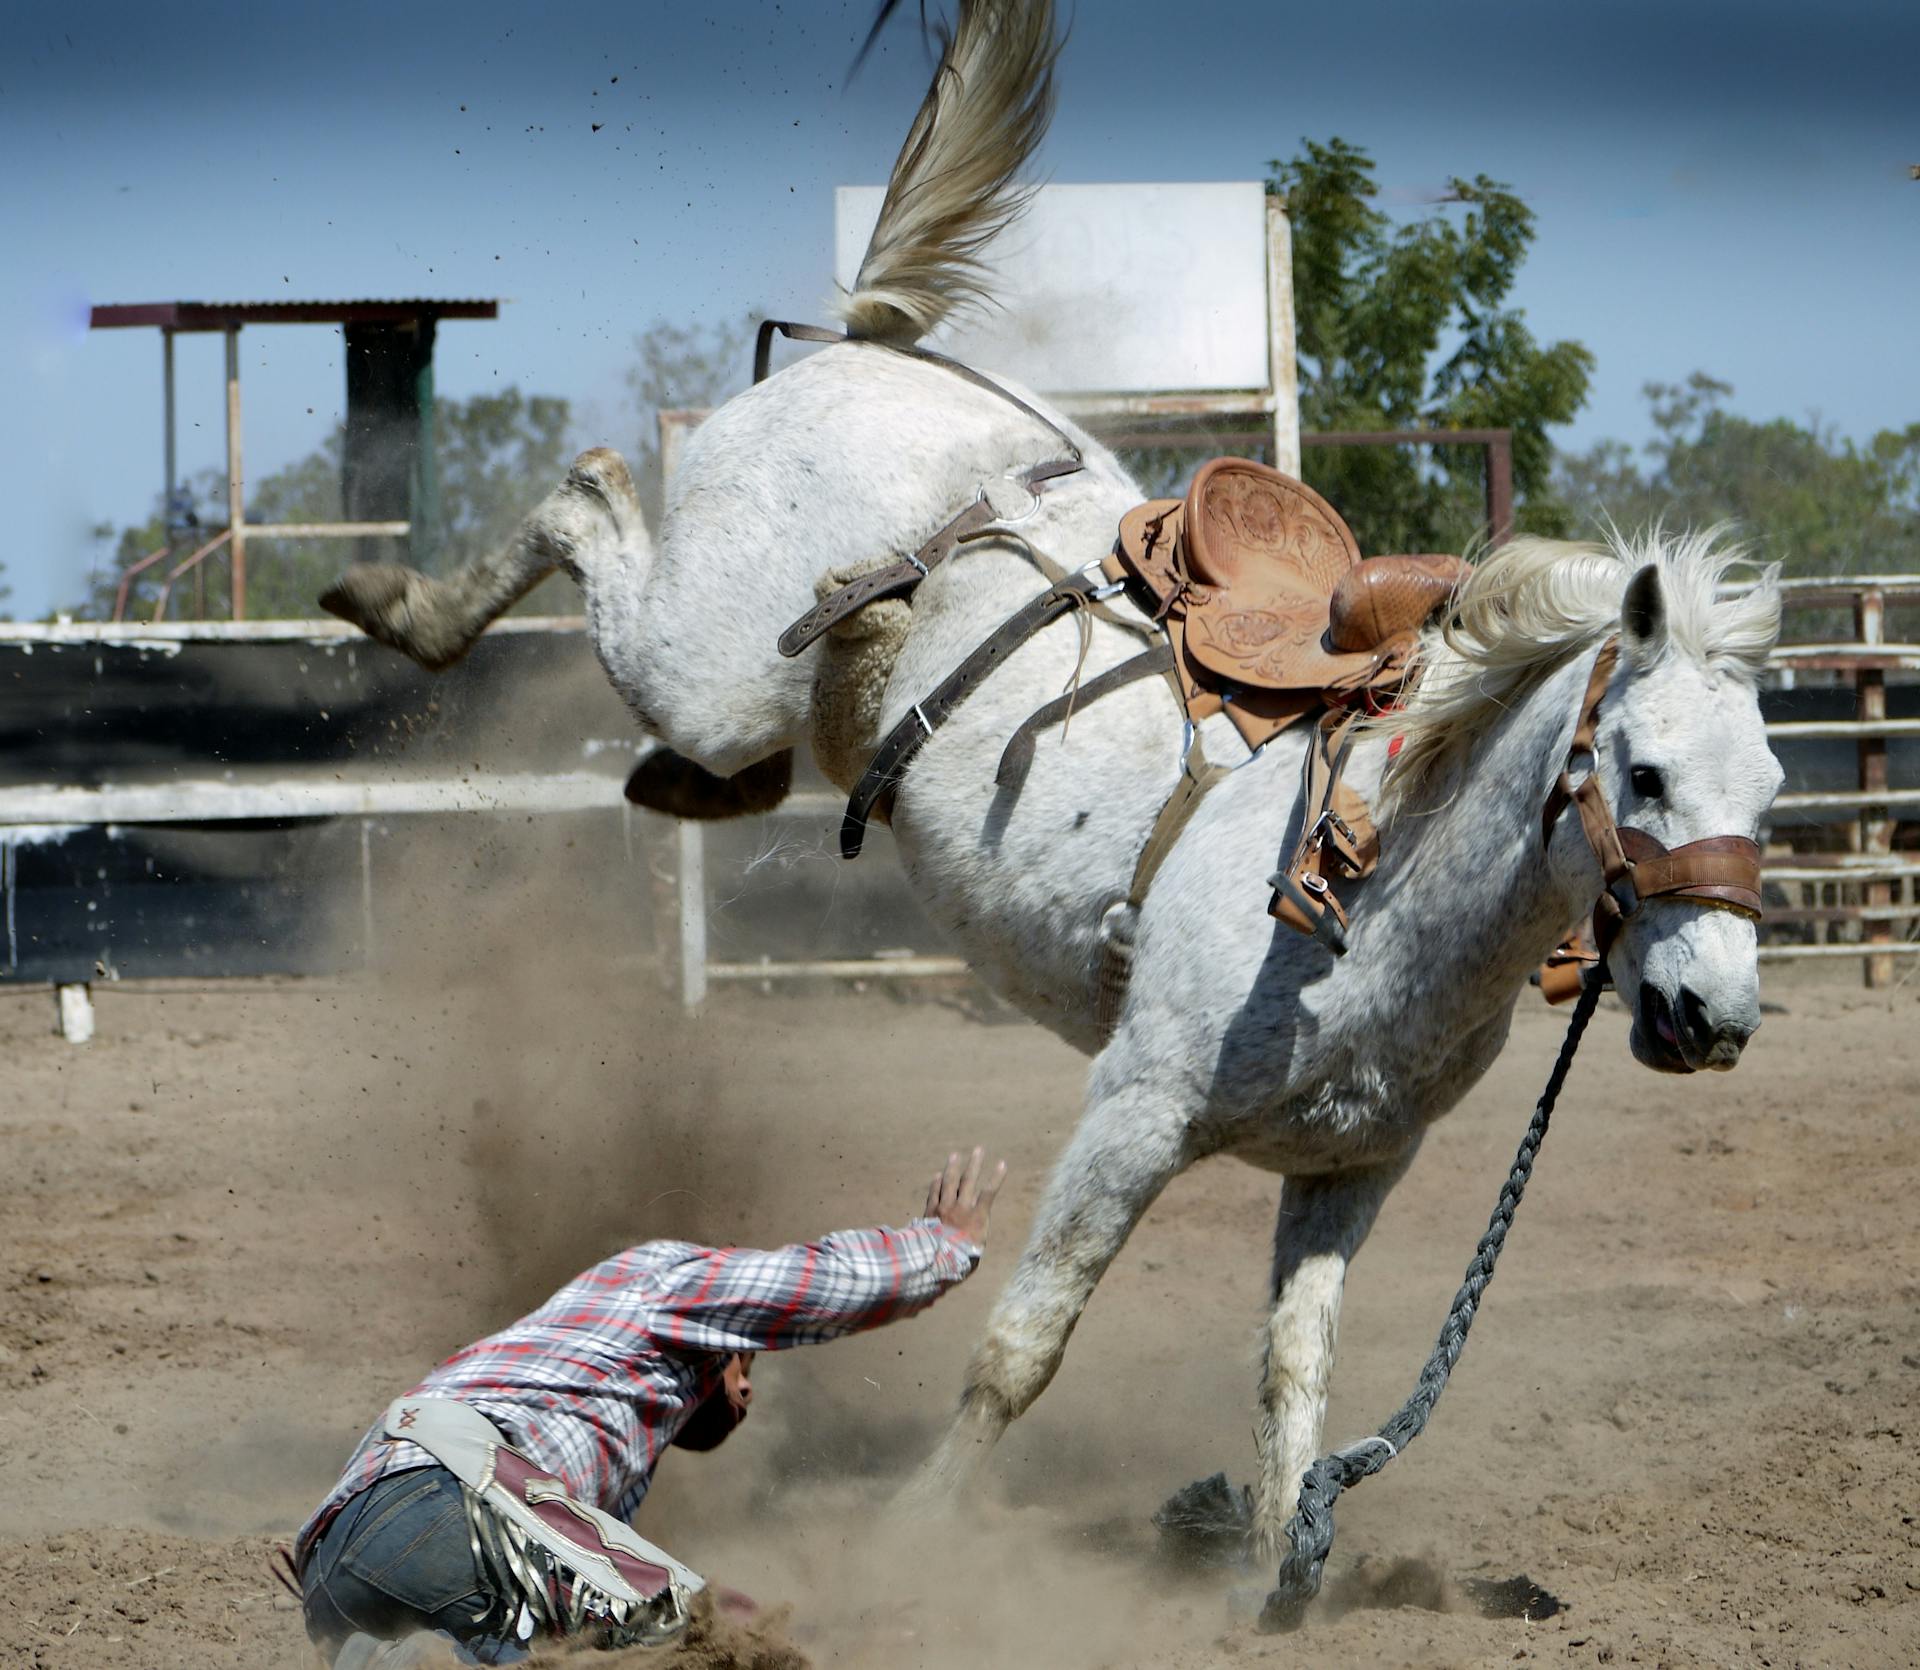 White Horse Kicking While Man on Ground